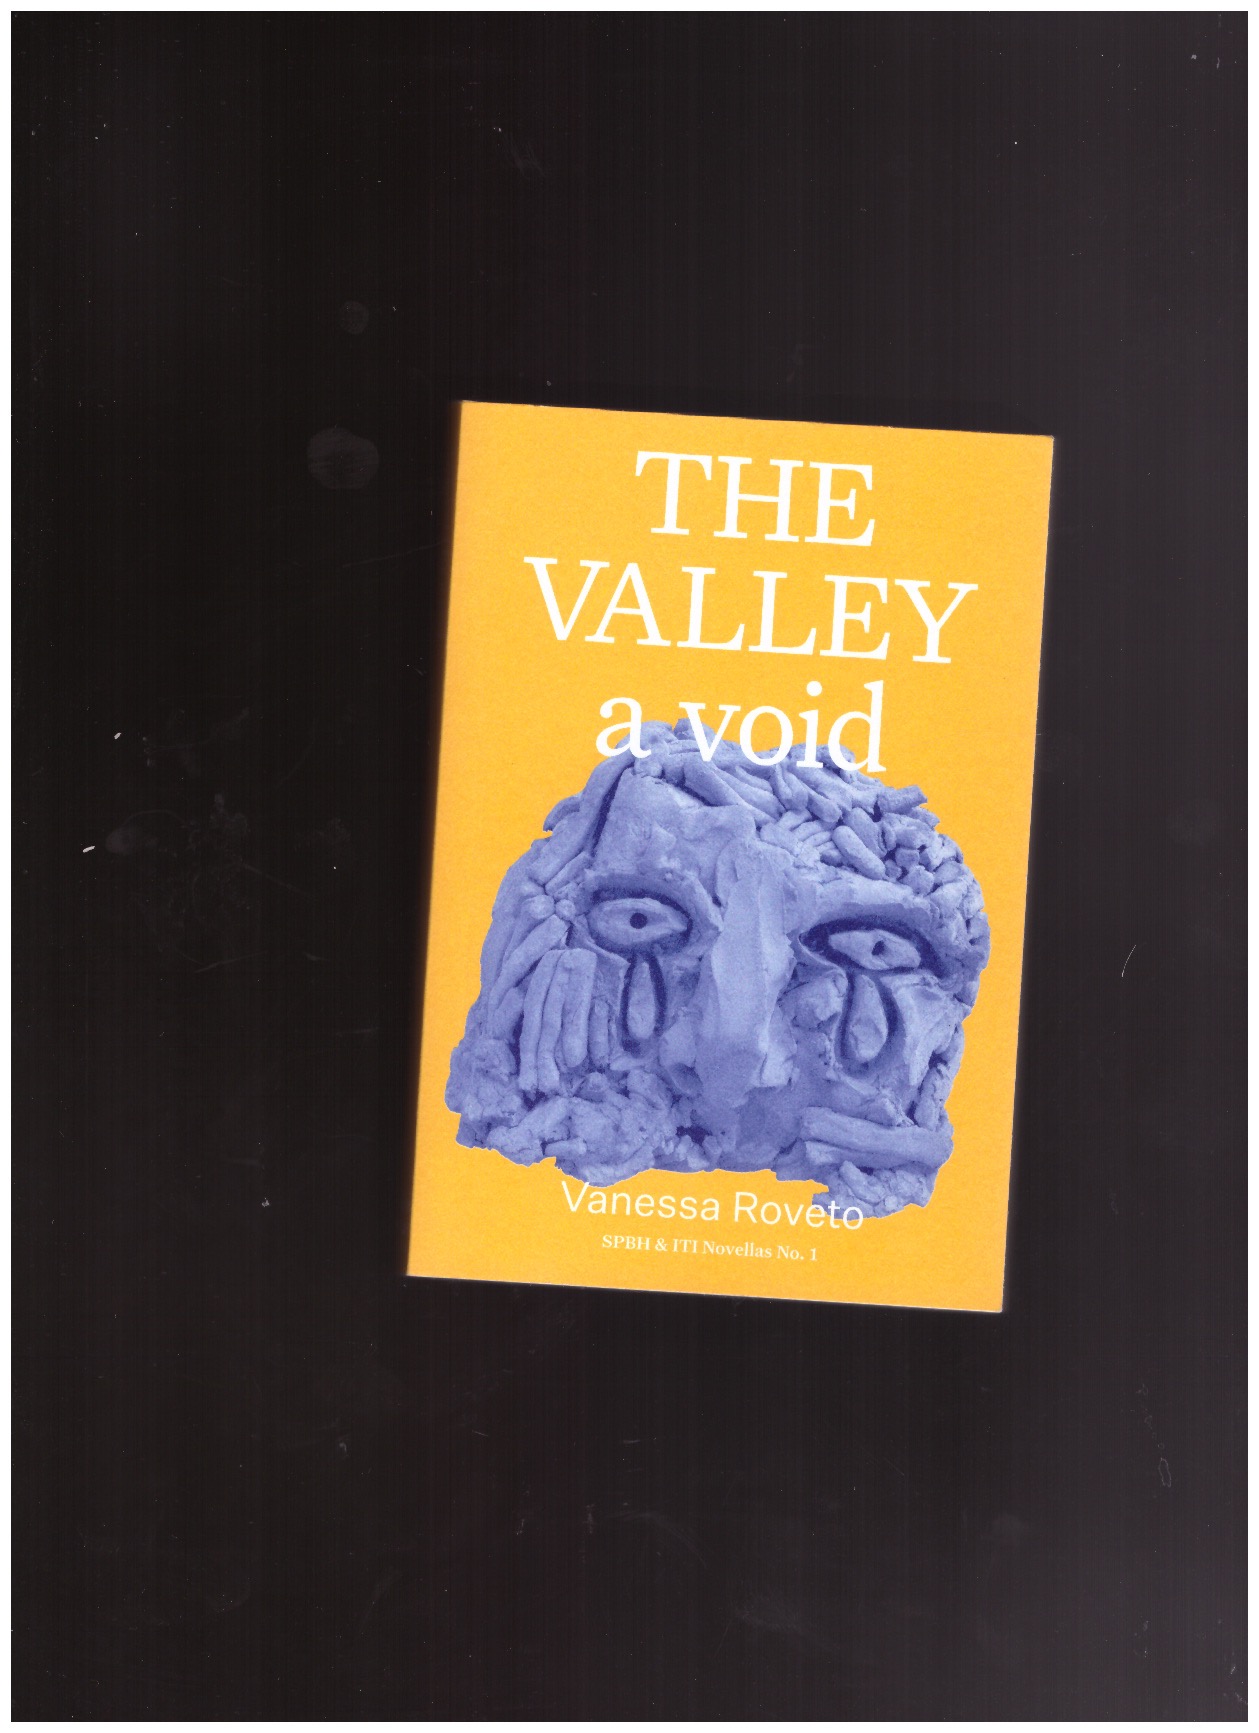 ROVETO, Vanessa - THE VALLEY a void